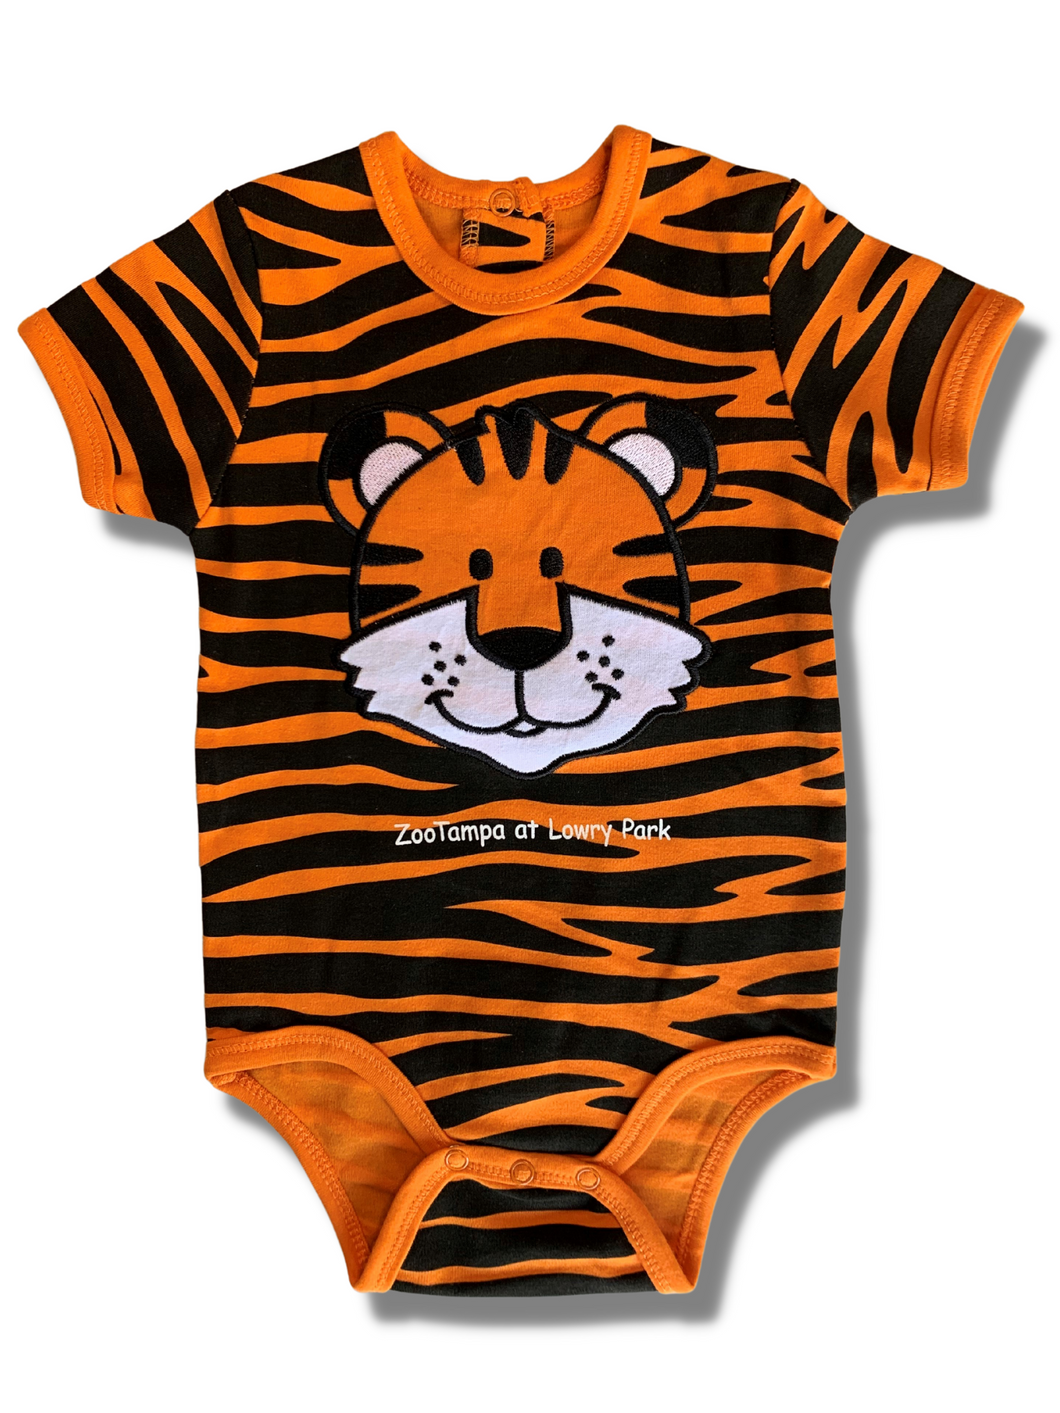 Tiger Baby Bodysuit